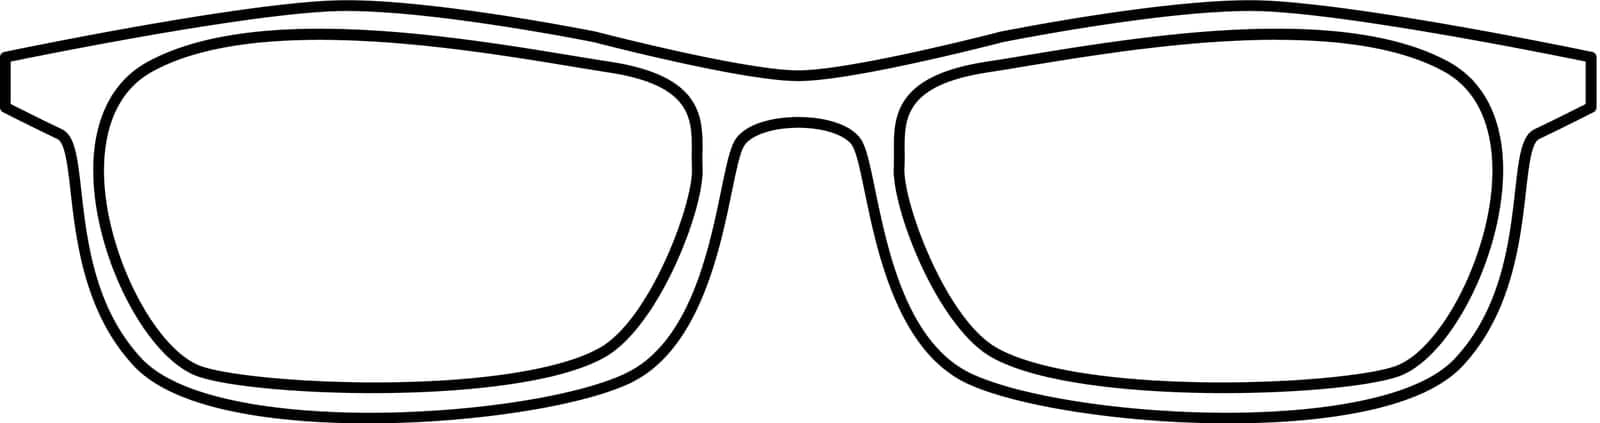 Thin Contour Line Of Rectangular Summer Sunglasses by barsrsind